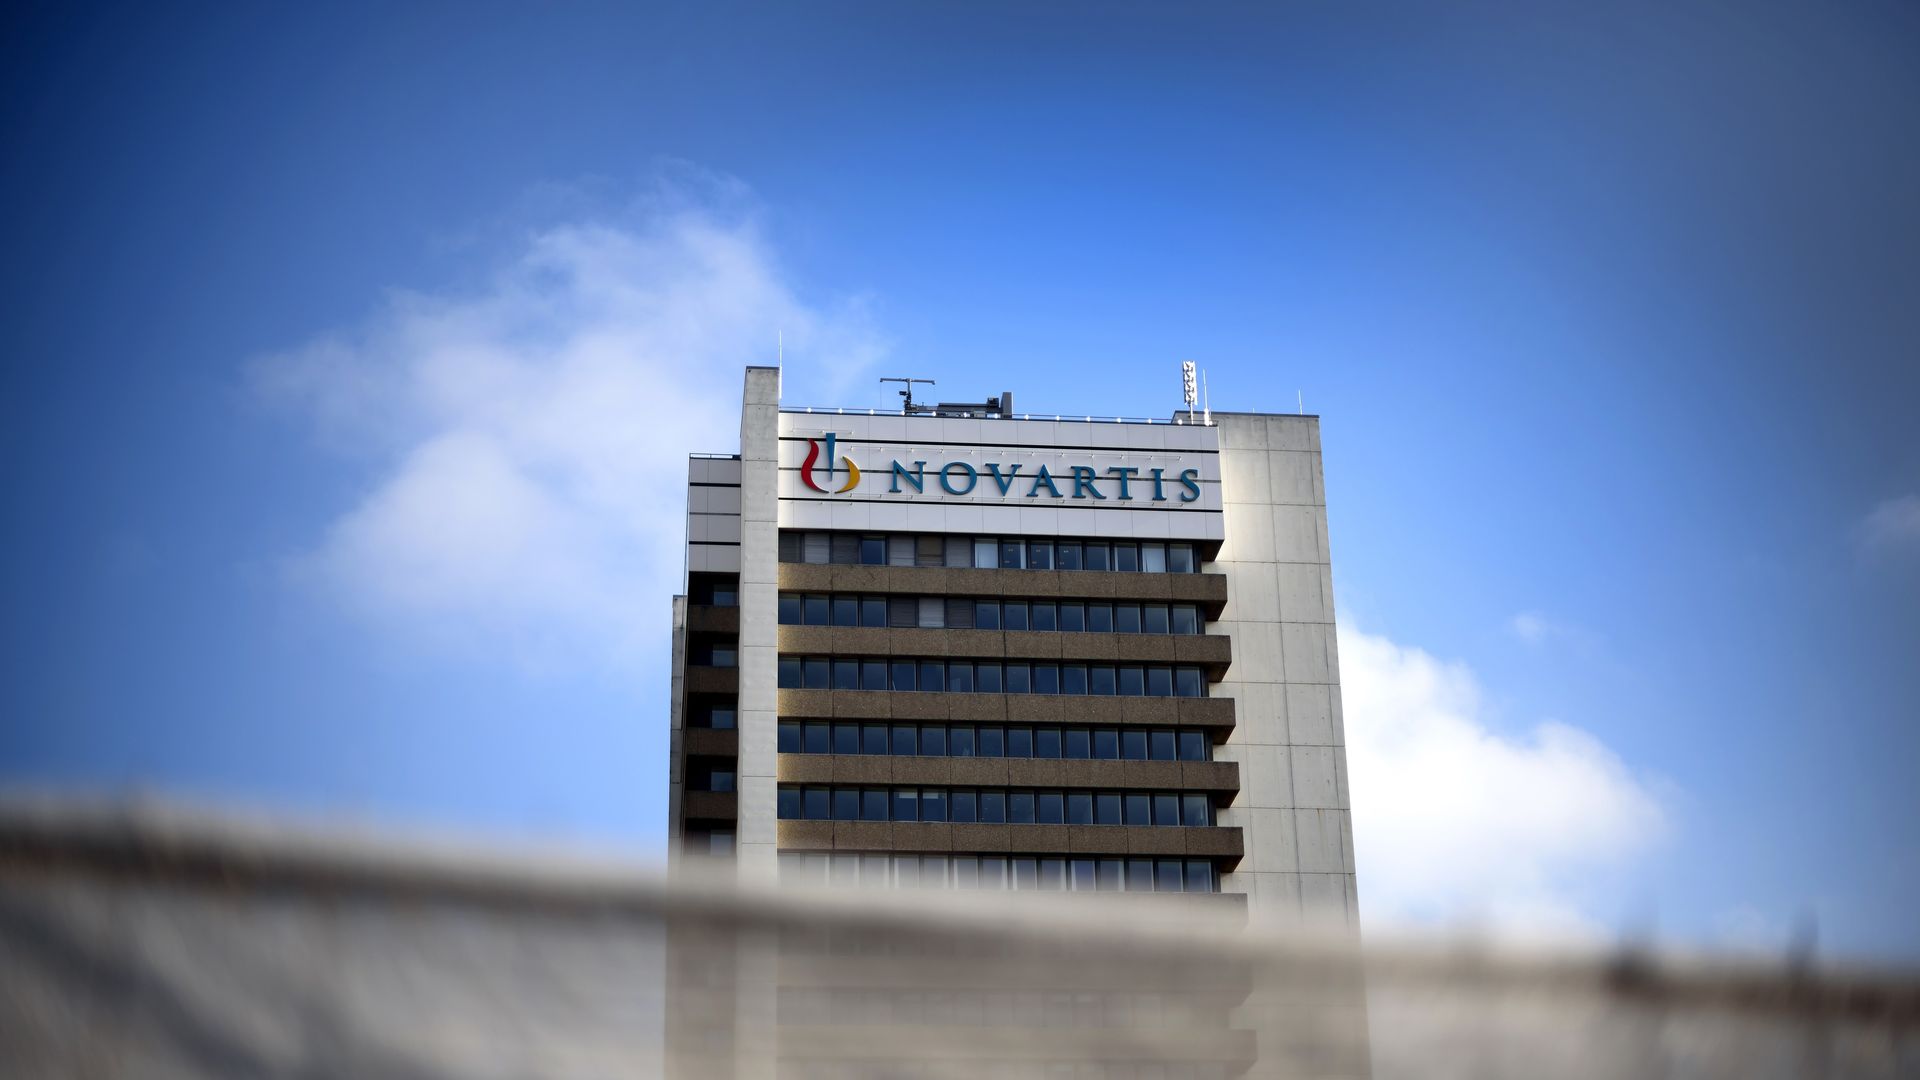 Novartis headquarters building in Switzerland.